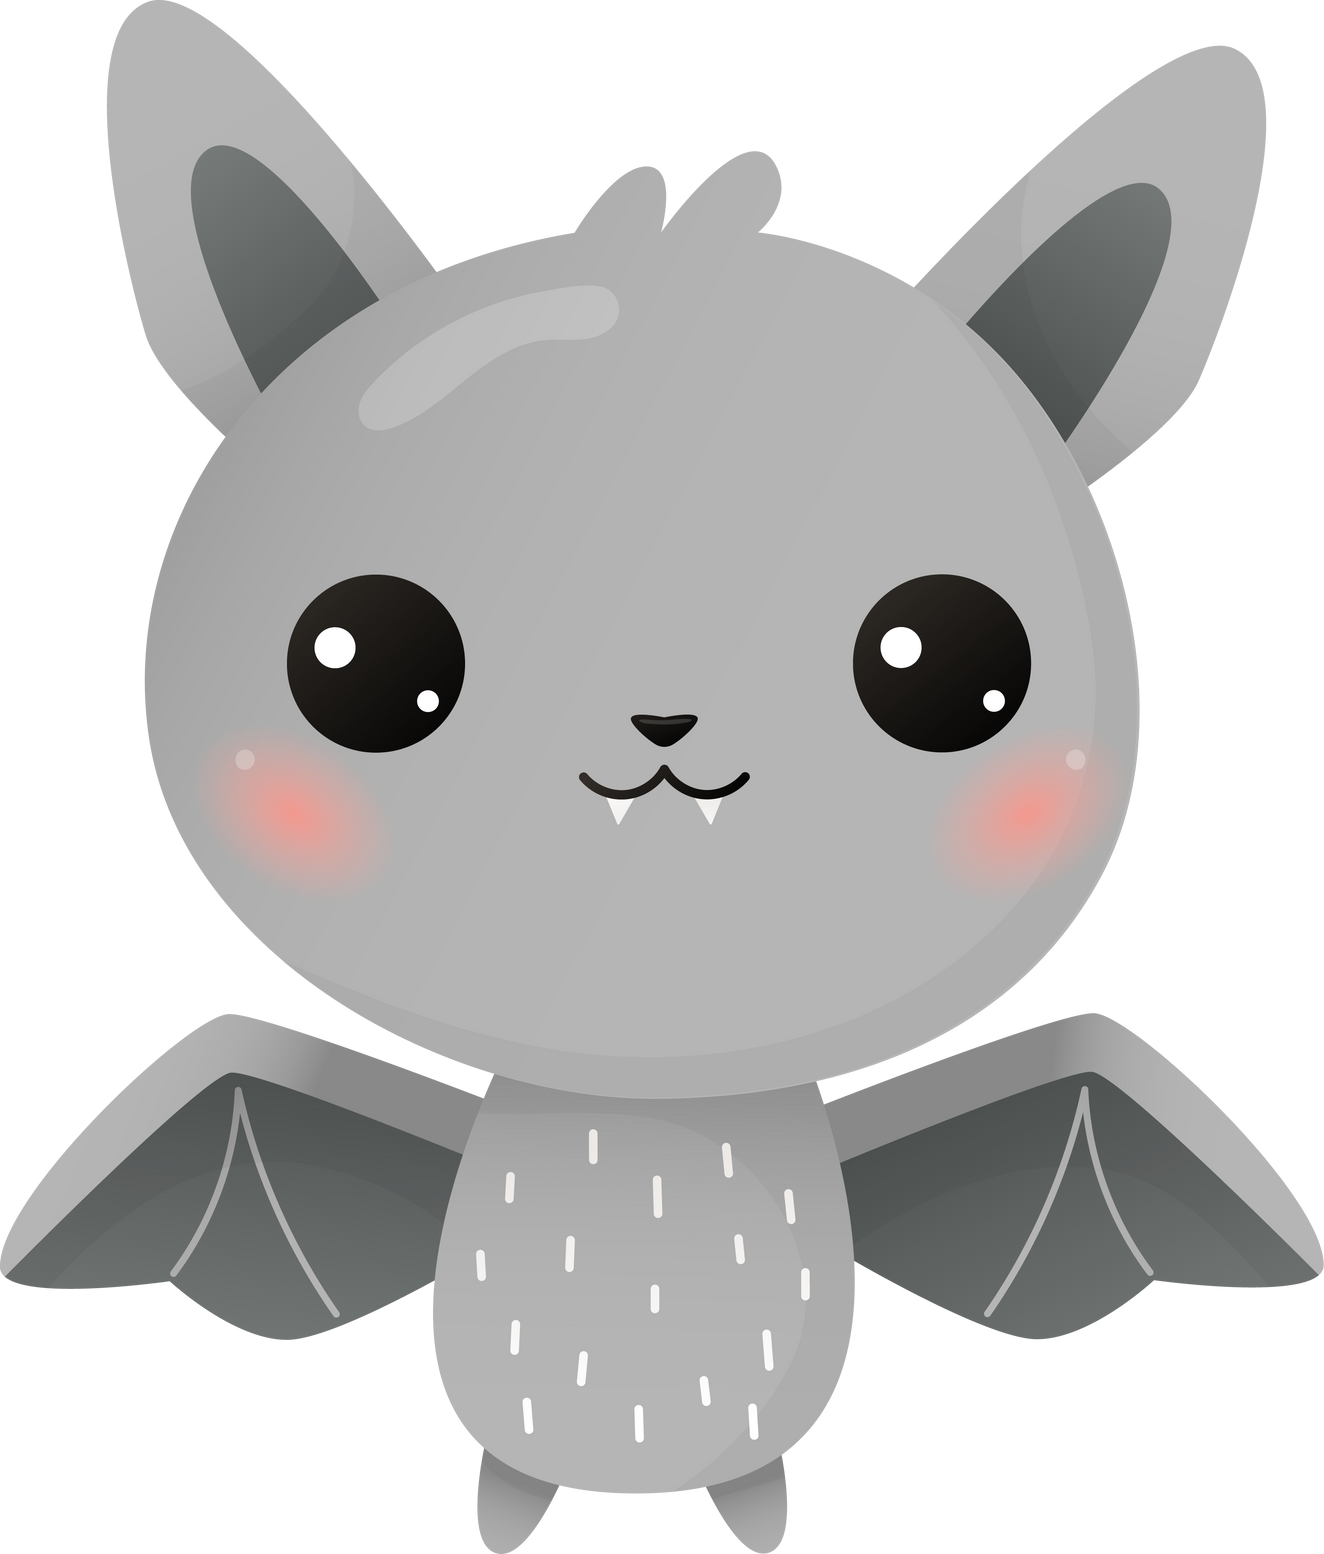 Cute cartoon baby bat illustration